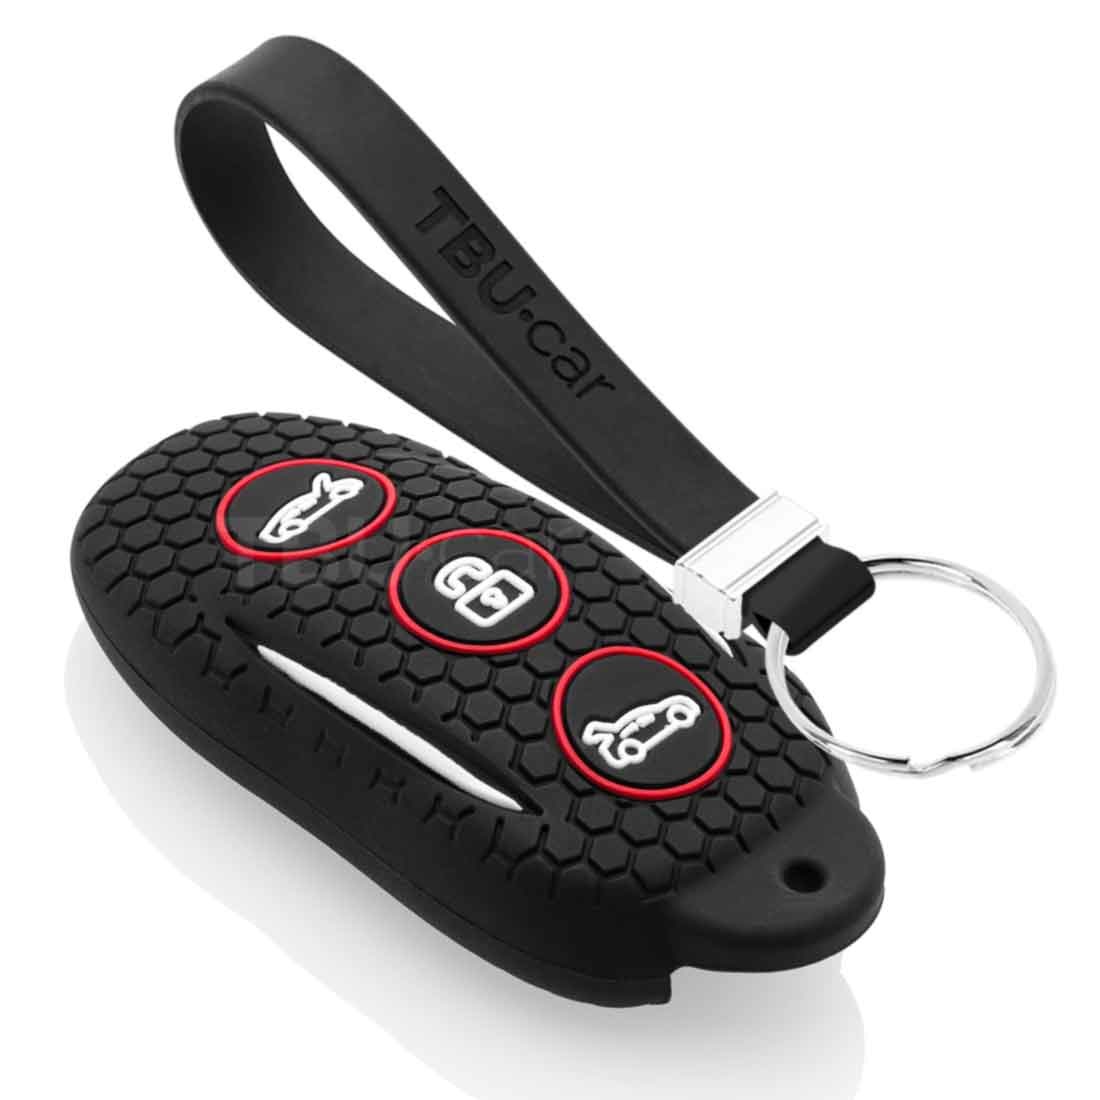 TBU car TBU car Autoschlüssel Hülle kompatibel mit Tesla 3 Tasten (Keyless Entry) - Schutzhülle aus Silikon - Auto Schlüsselhülle Cover in Schwarz